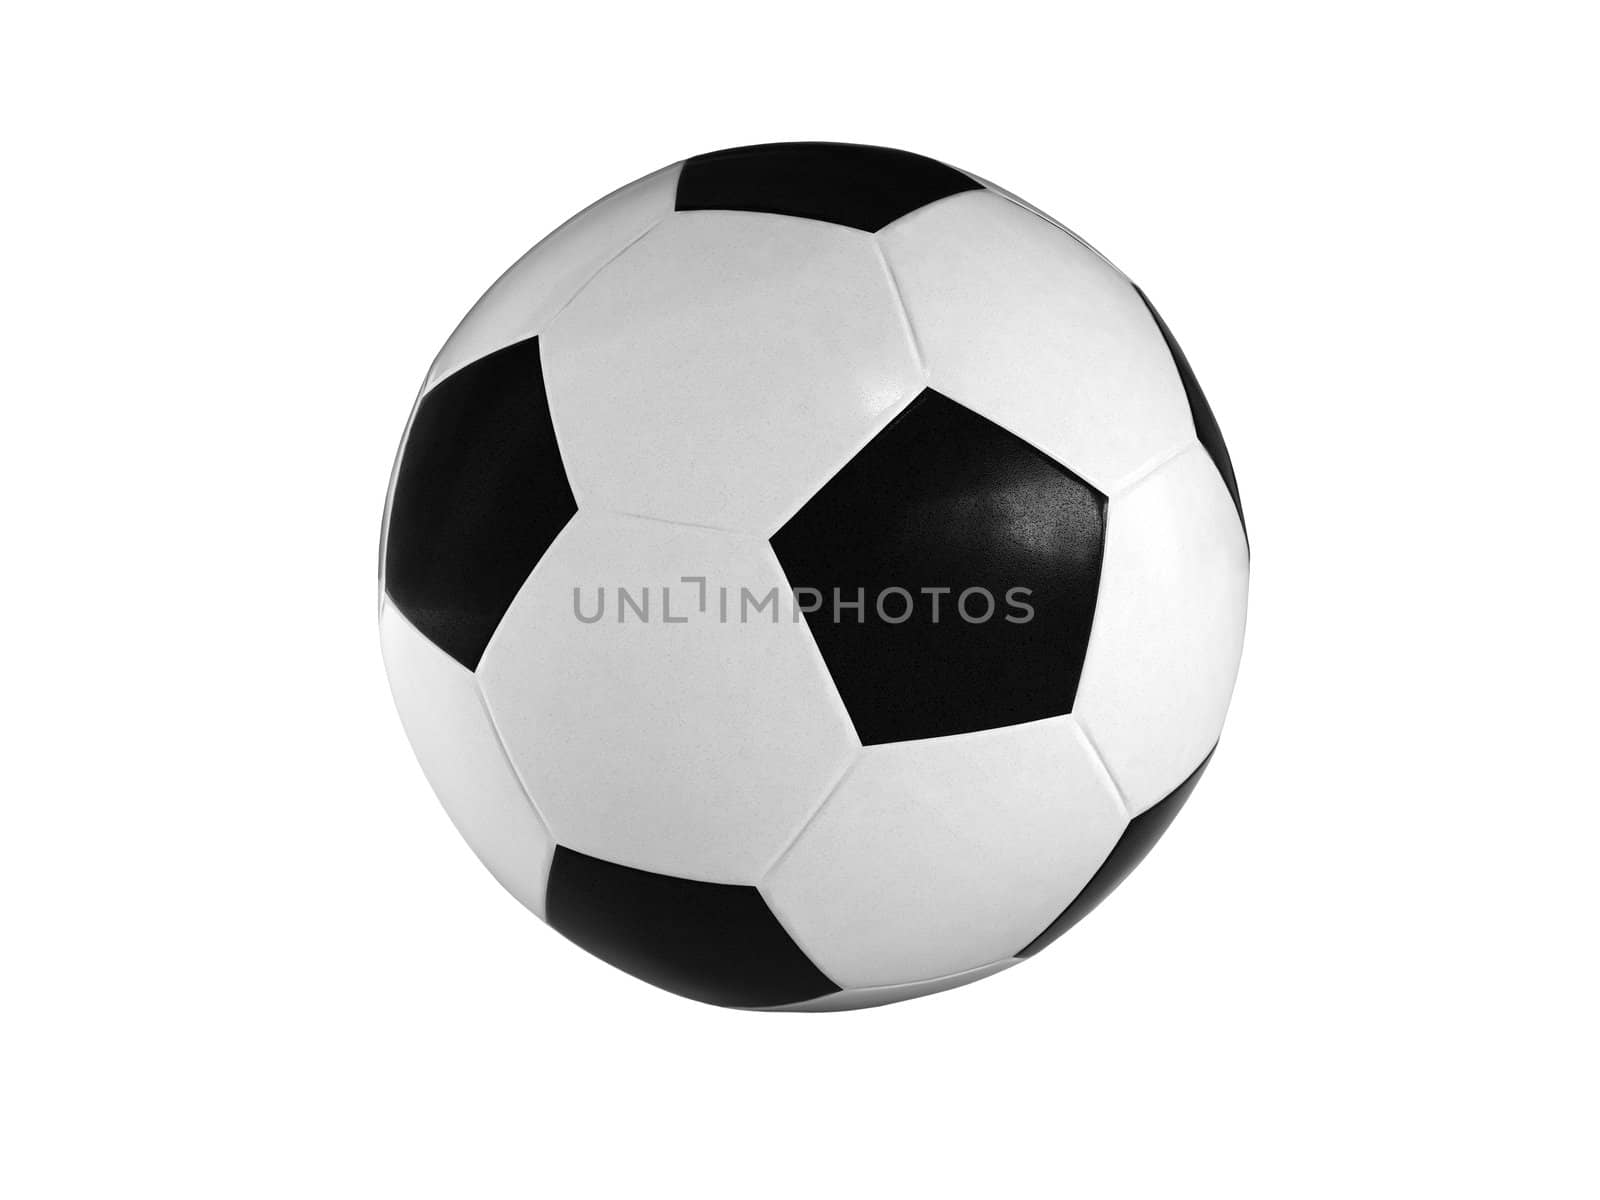 Soccer ball by dimol